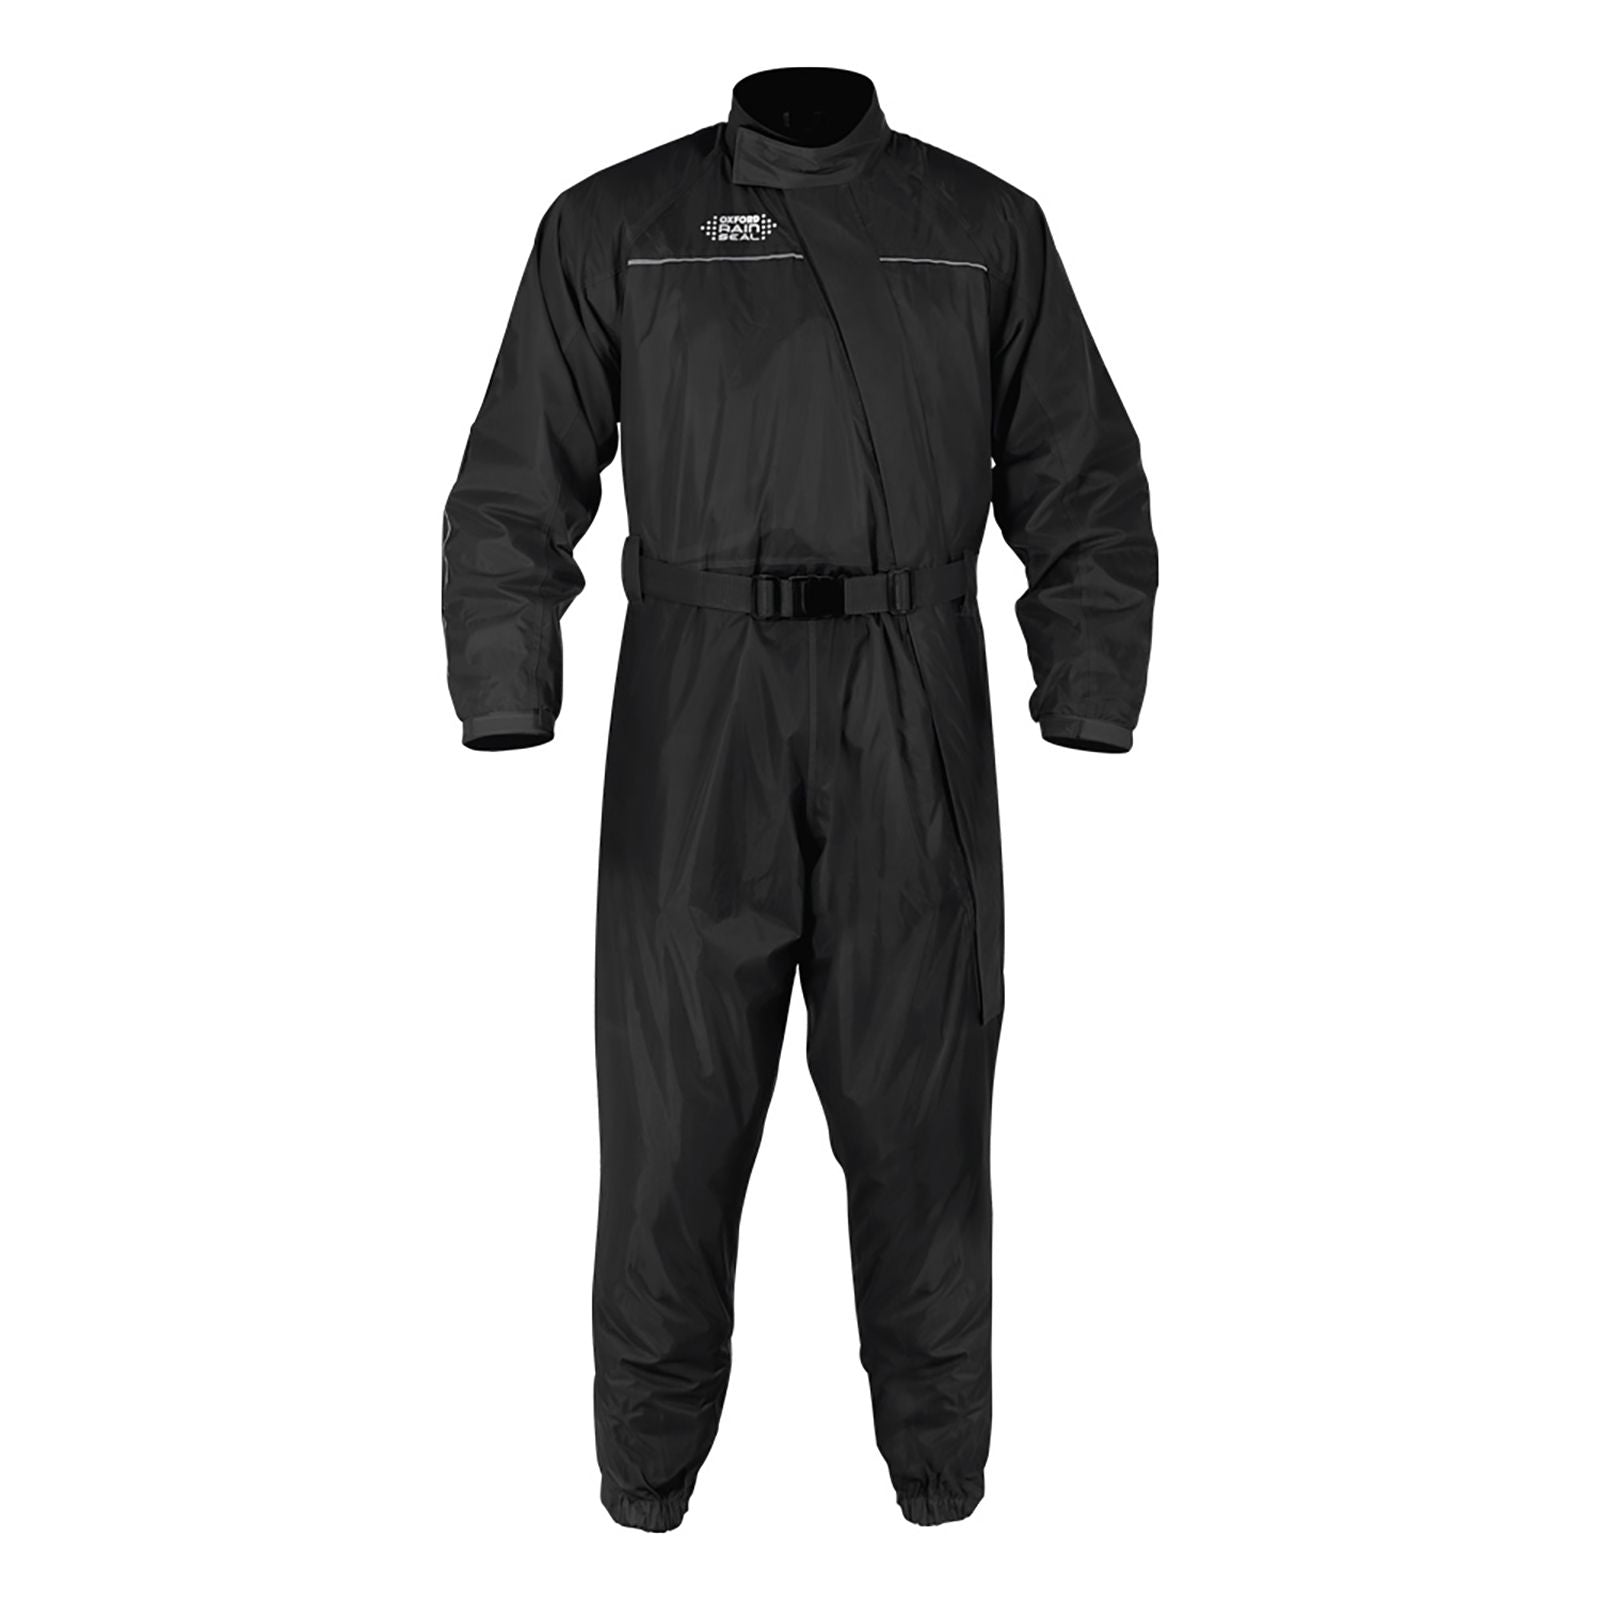 New OXFORD Rainseal Rain Suit - Black - Small #OXRM300S